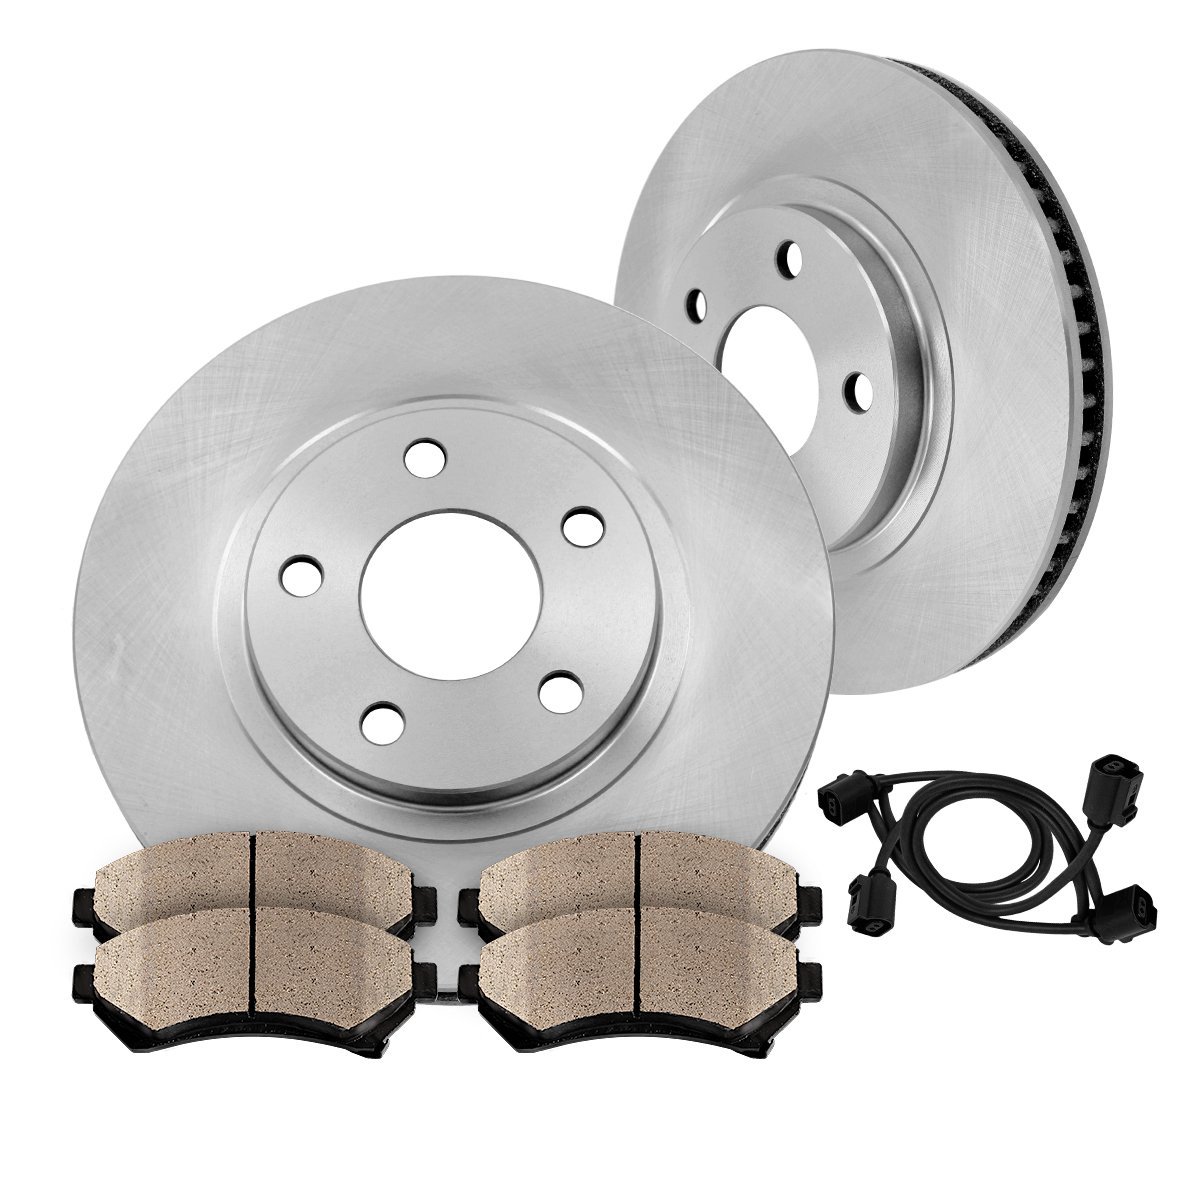 Brake Parts: Pads, Rotors, Calipers